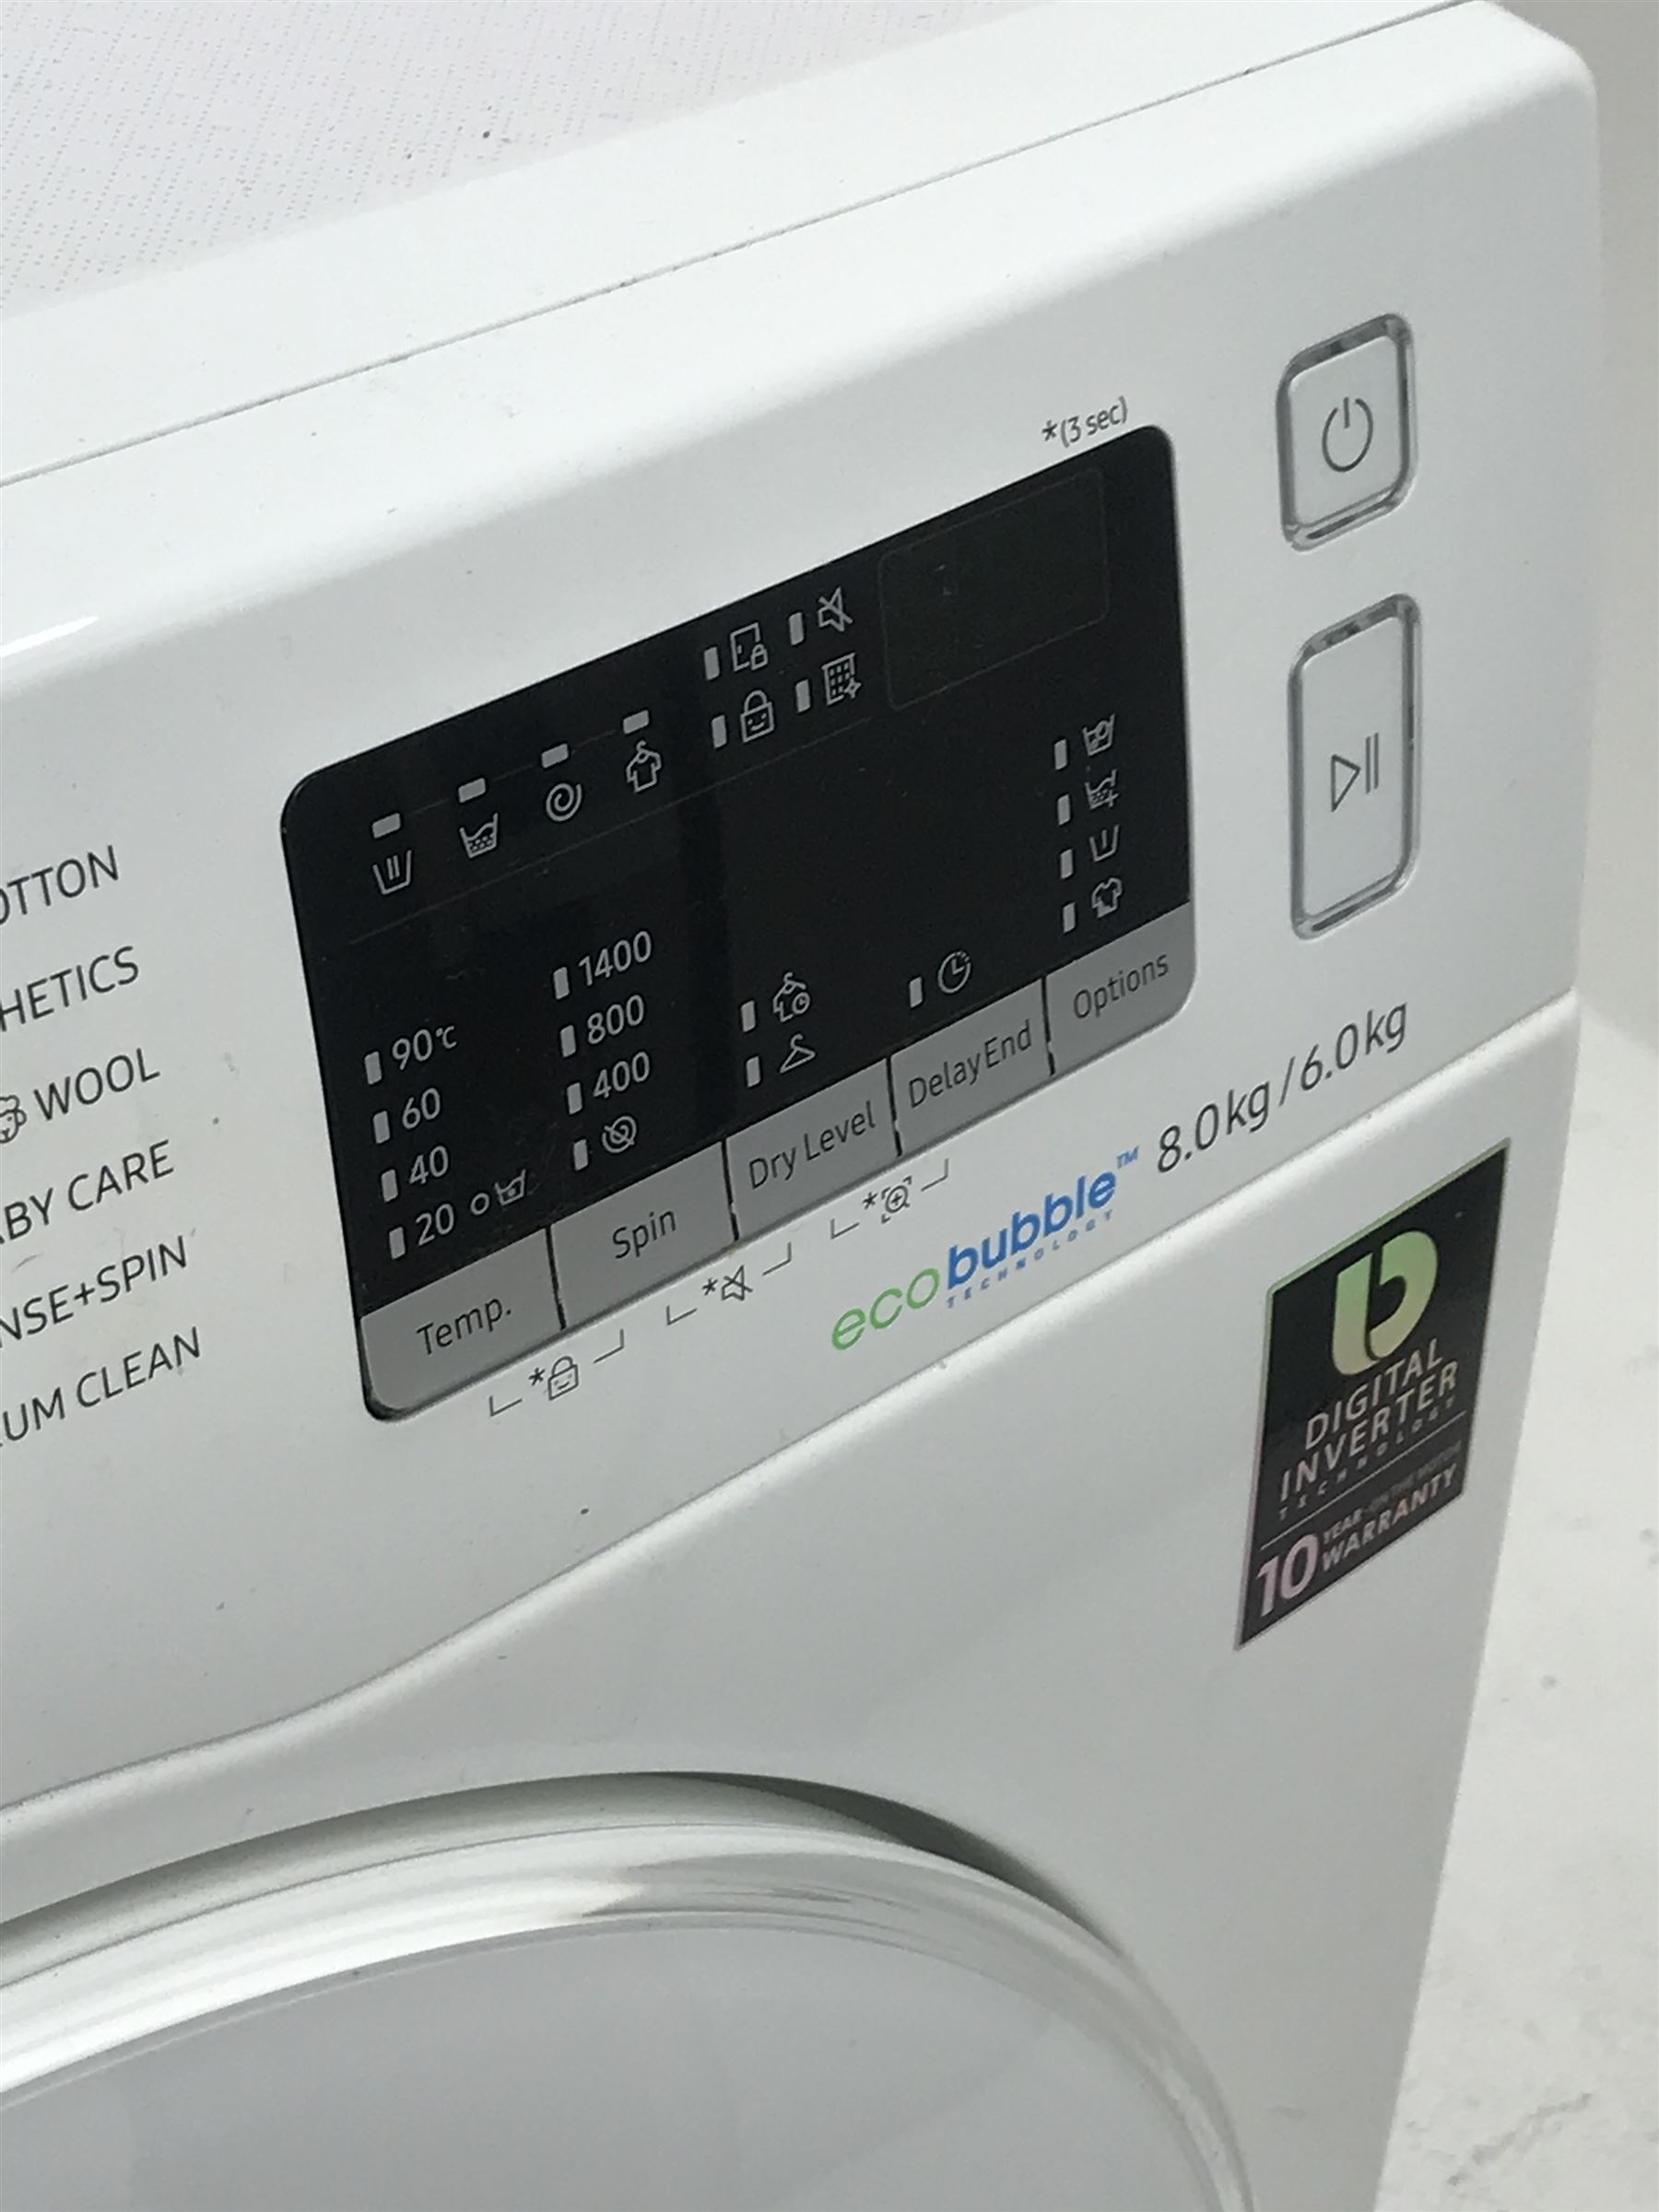 Samsung washing machine - Image 3 of 3